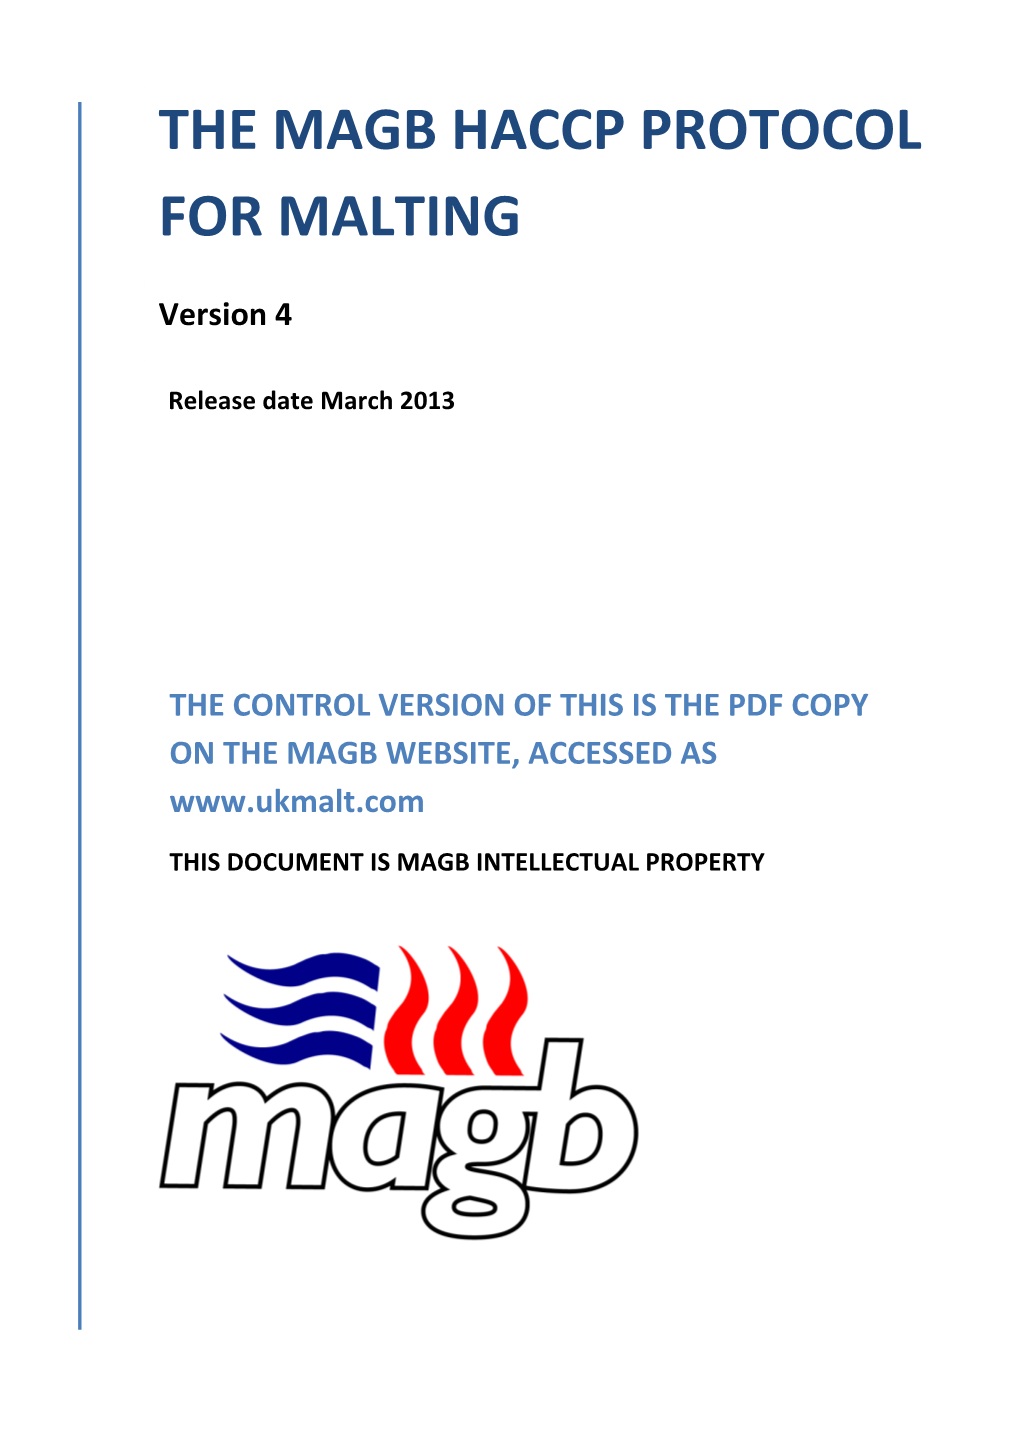 MAGB HACCP Guide V4